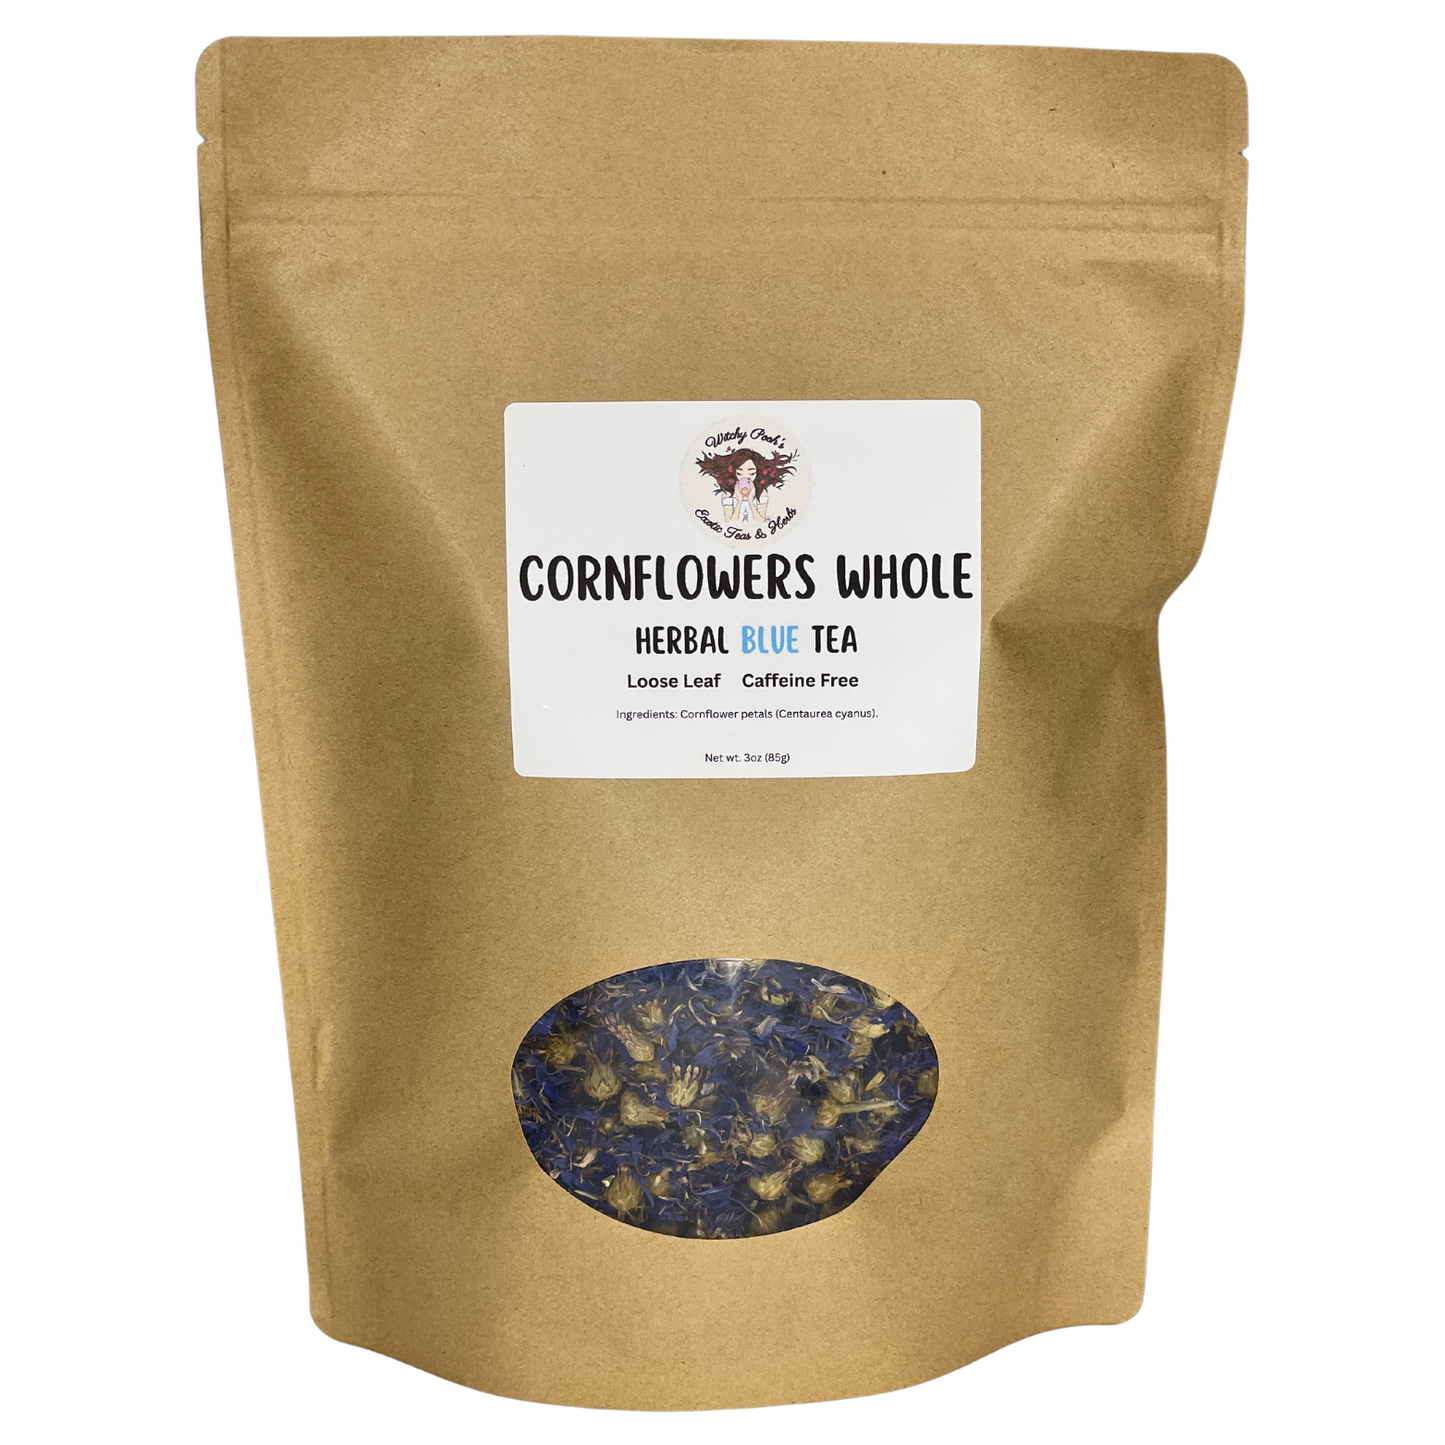 Witchy Pooh's Cornflowers Whole Loose Leaf Herbal Blue Tea, Caffeine Free